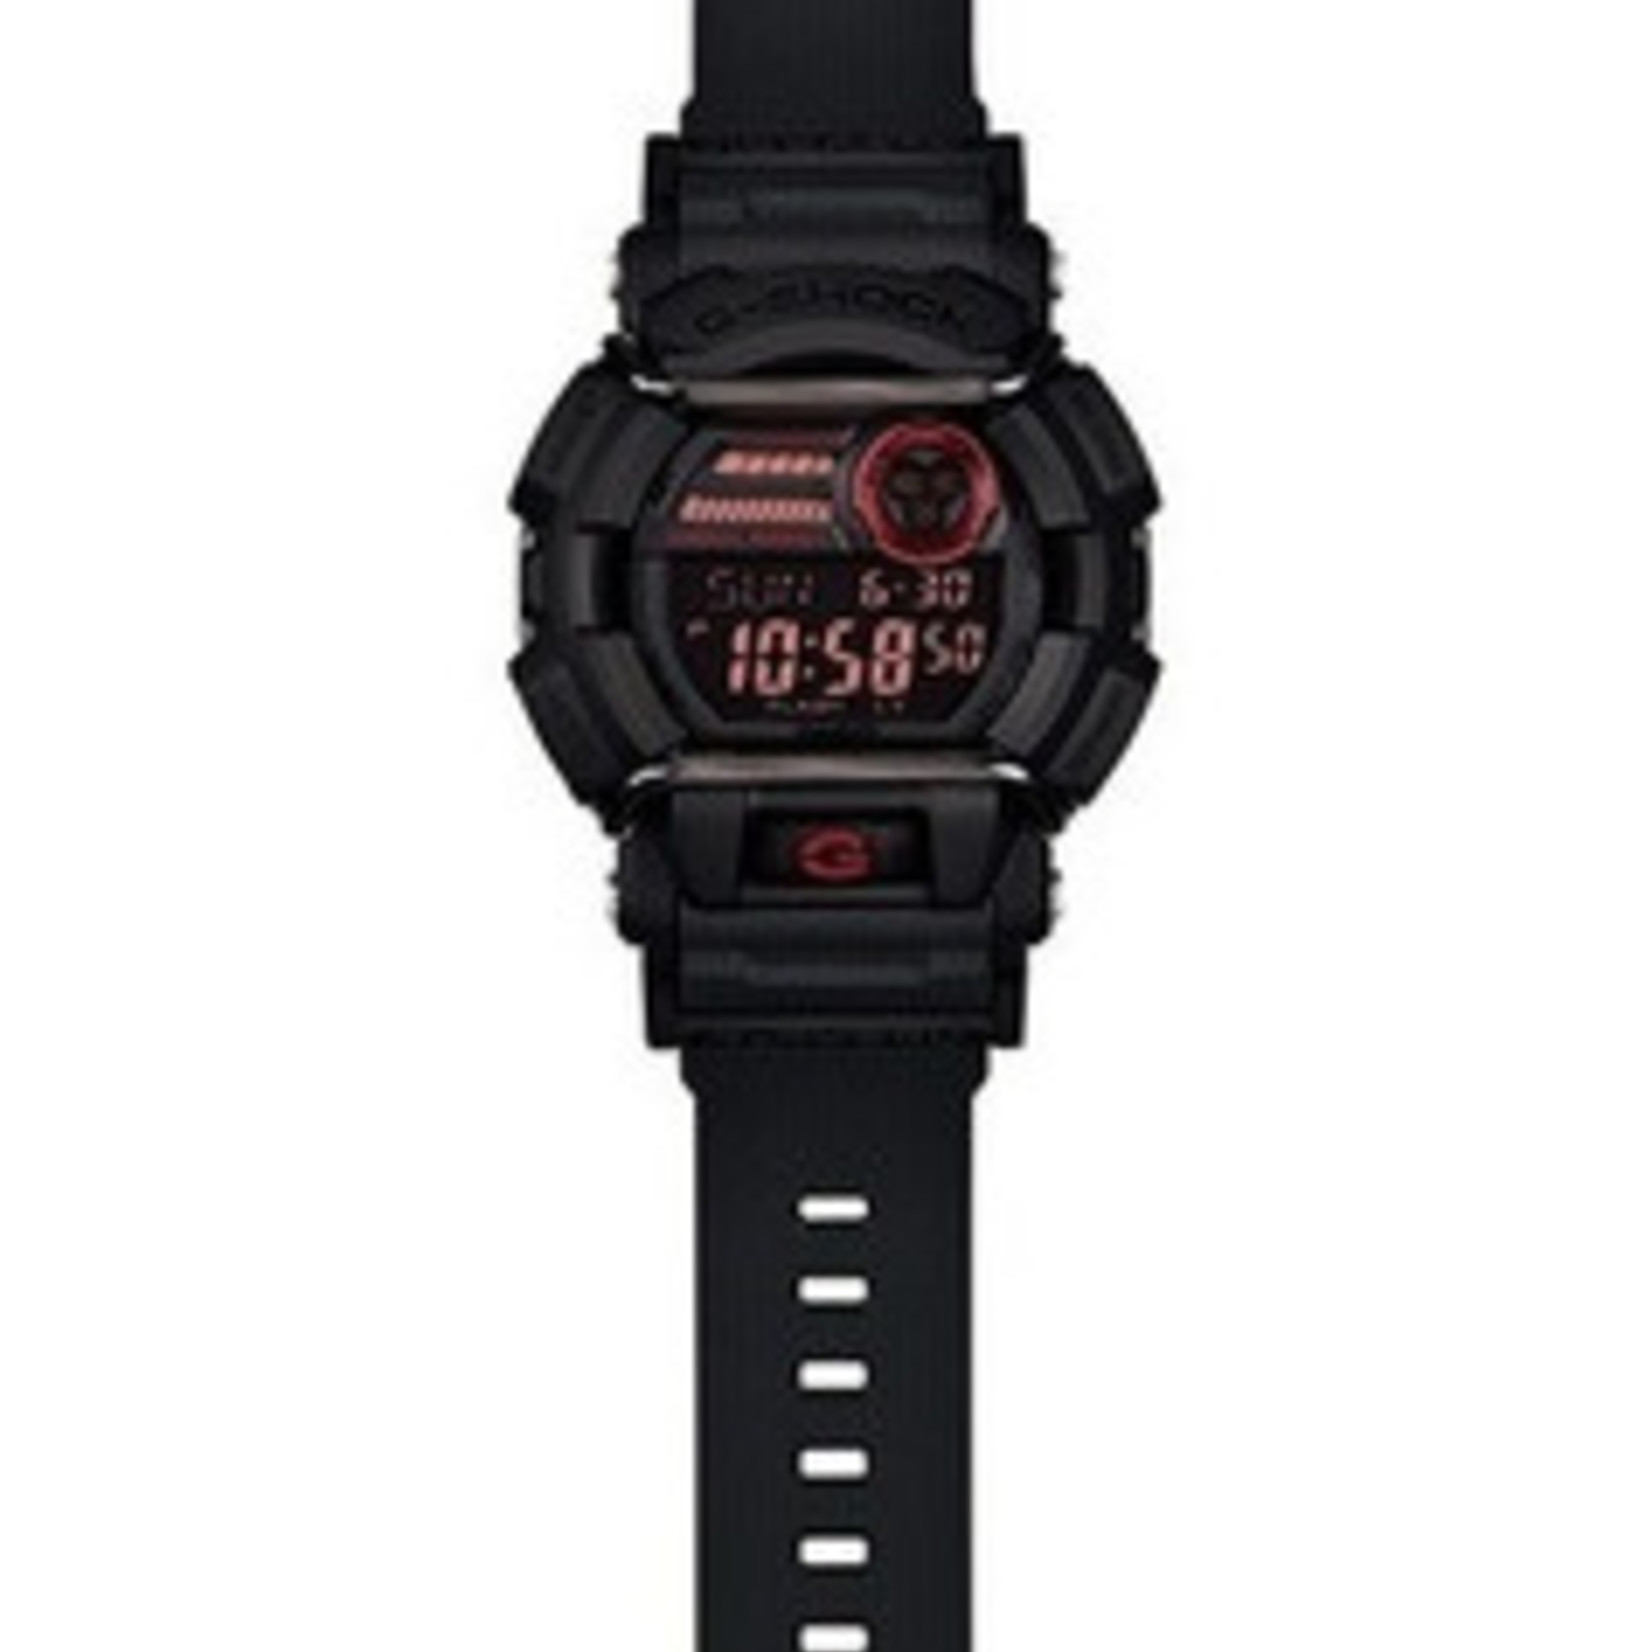 Casio Men's G-Shock GD400-1CR Black Resin Sport Watch